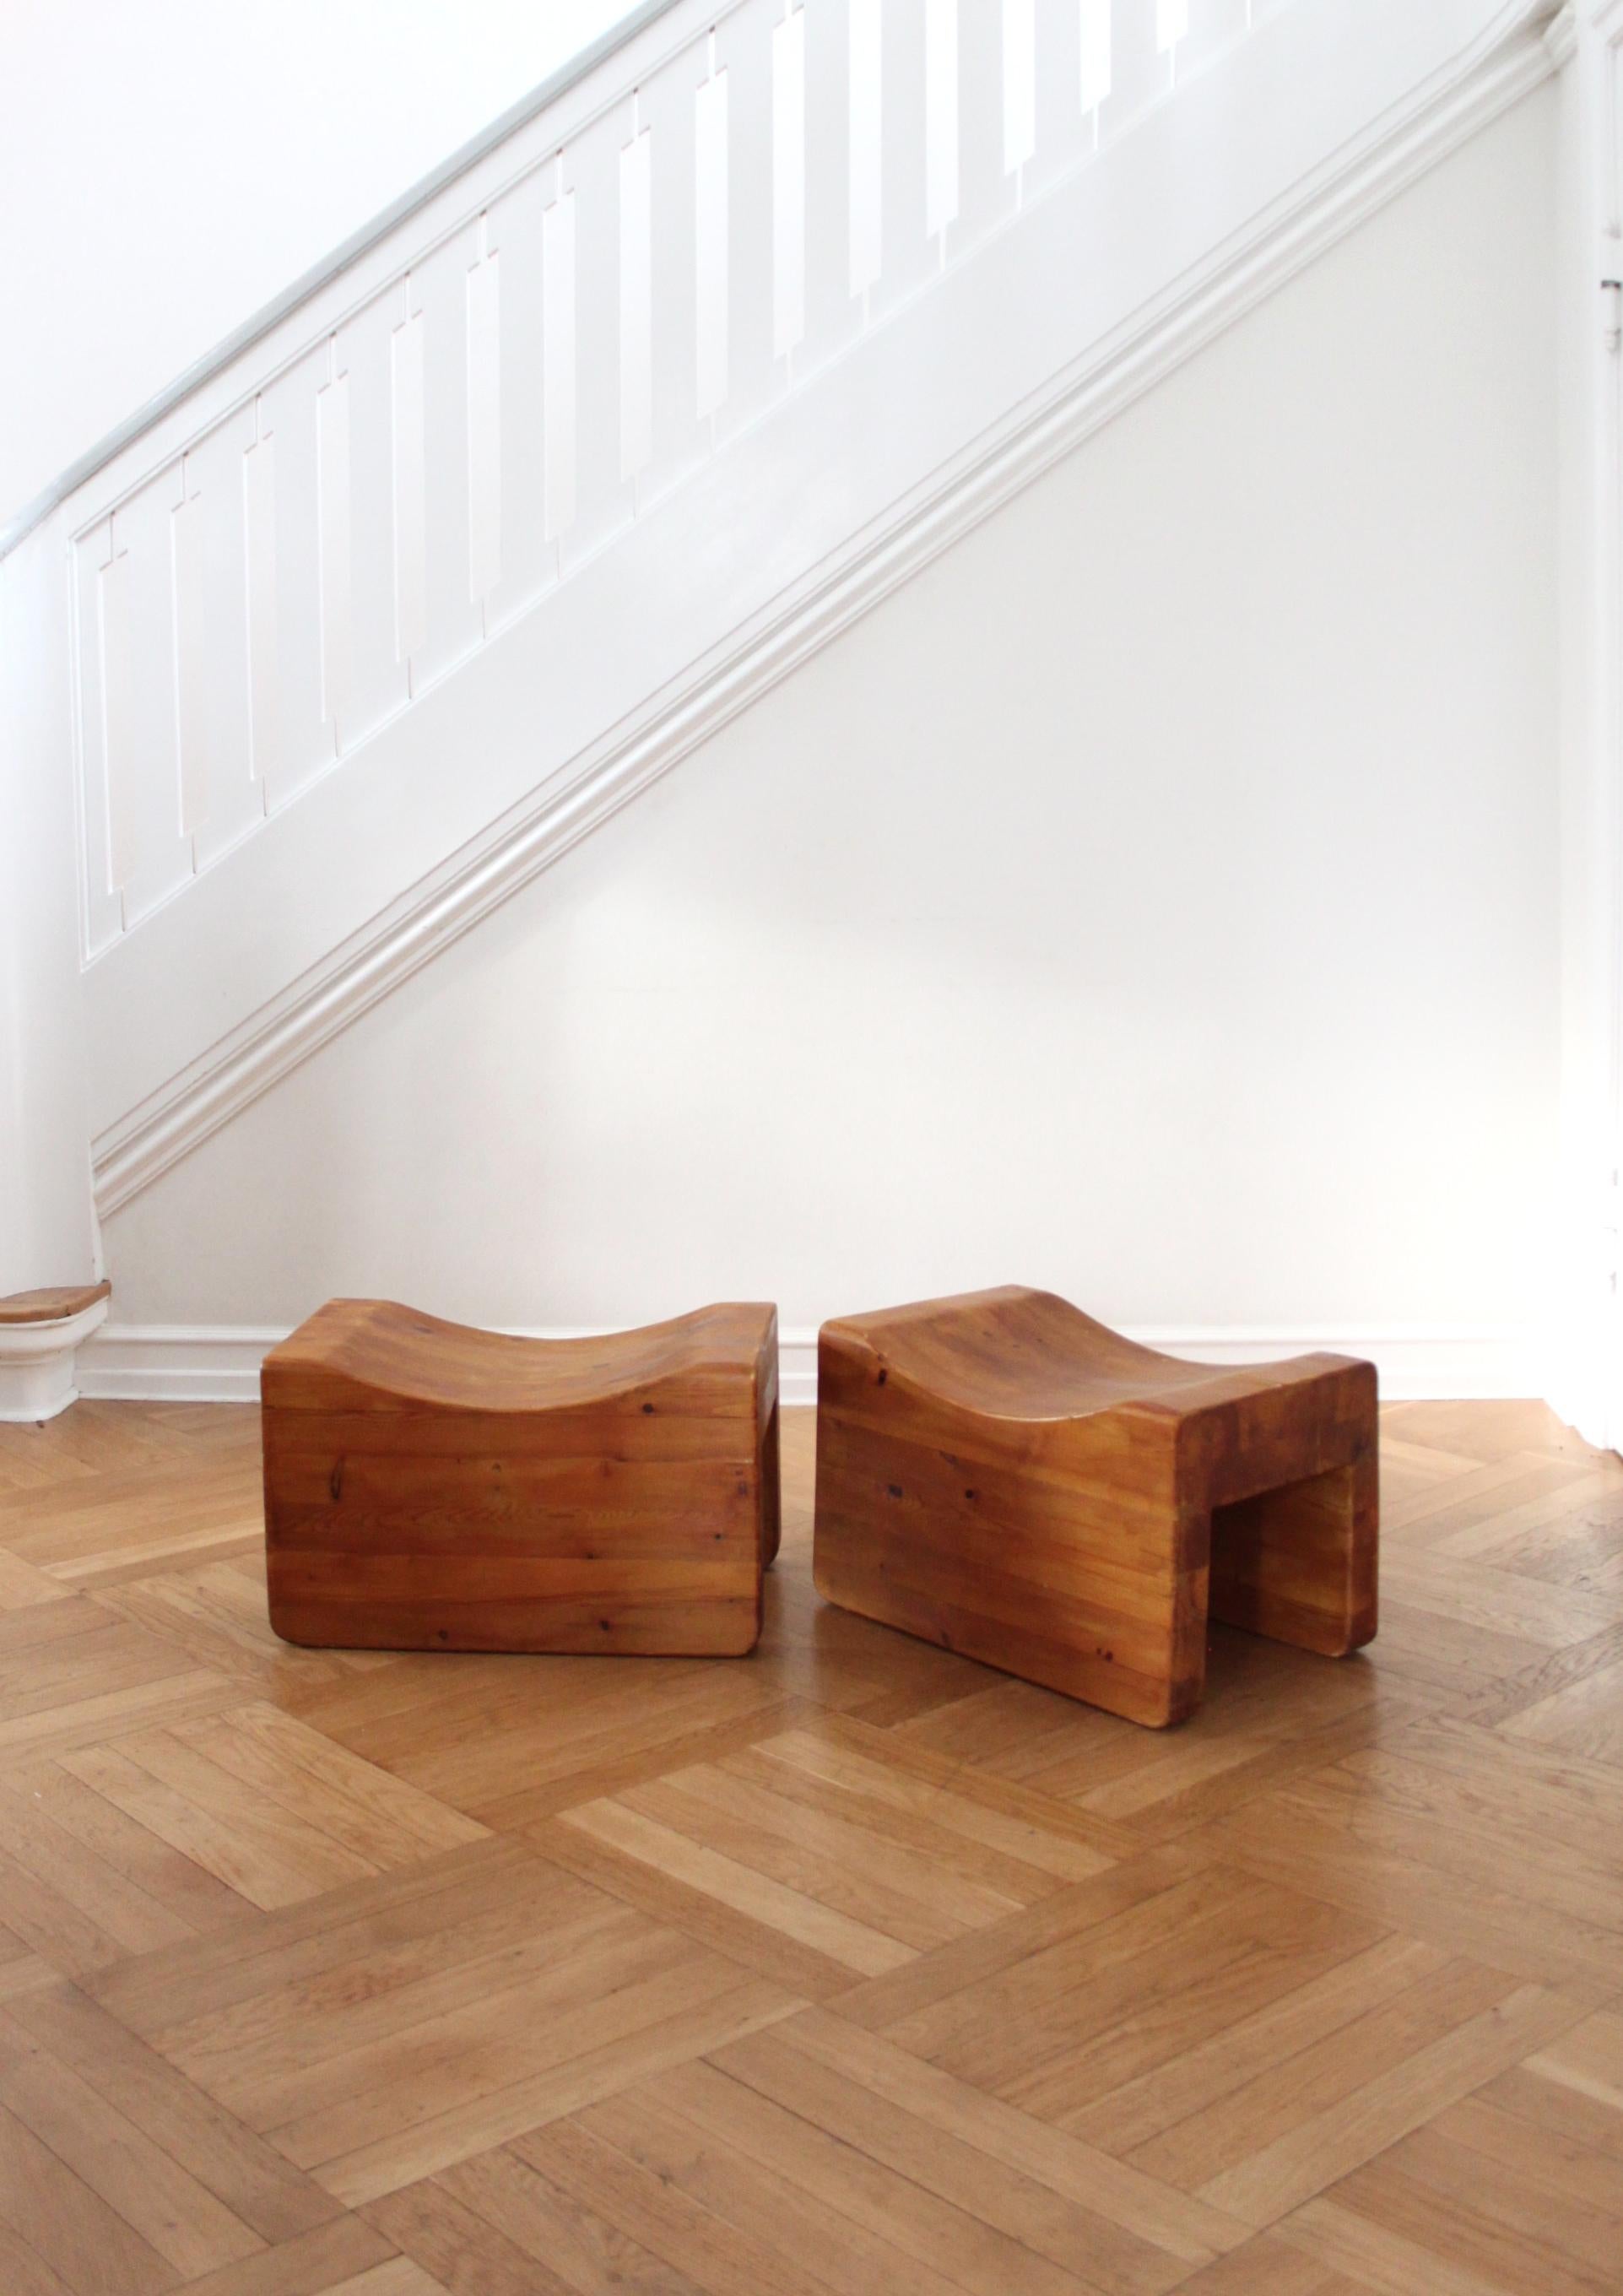 K.J. Petterson & Söner, Pair of Stools in Pine, Scandinavian Modern Design For Sale 1